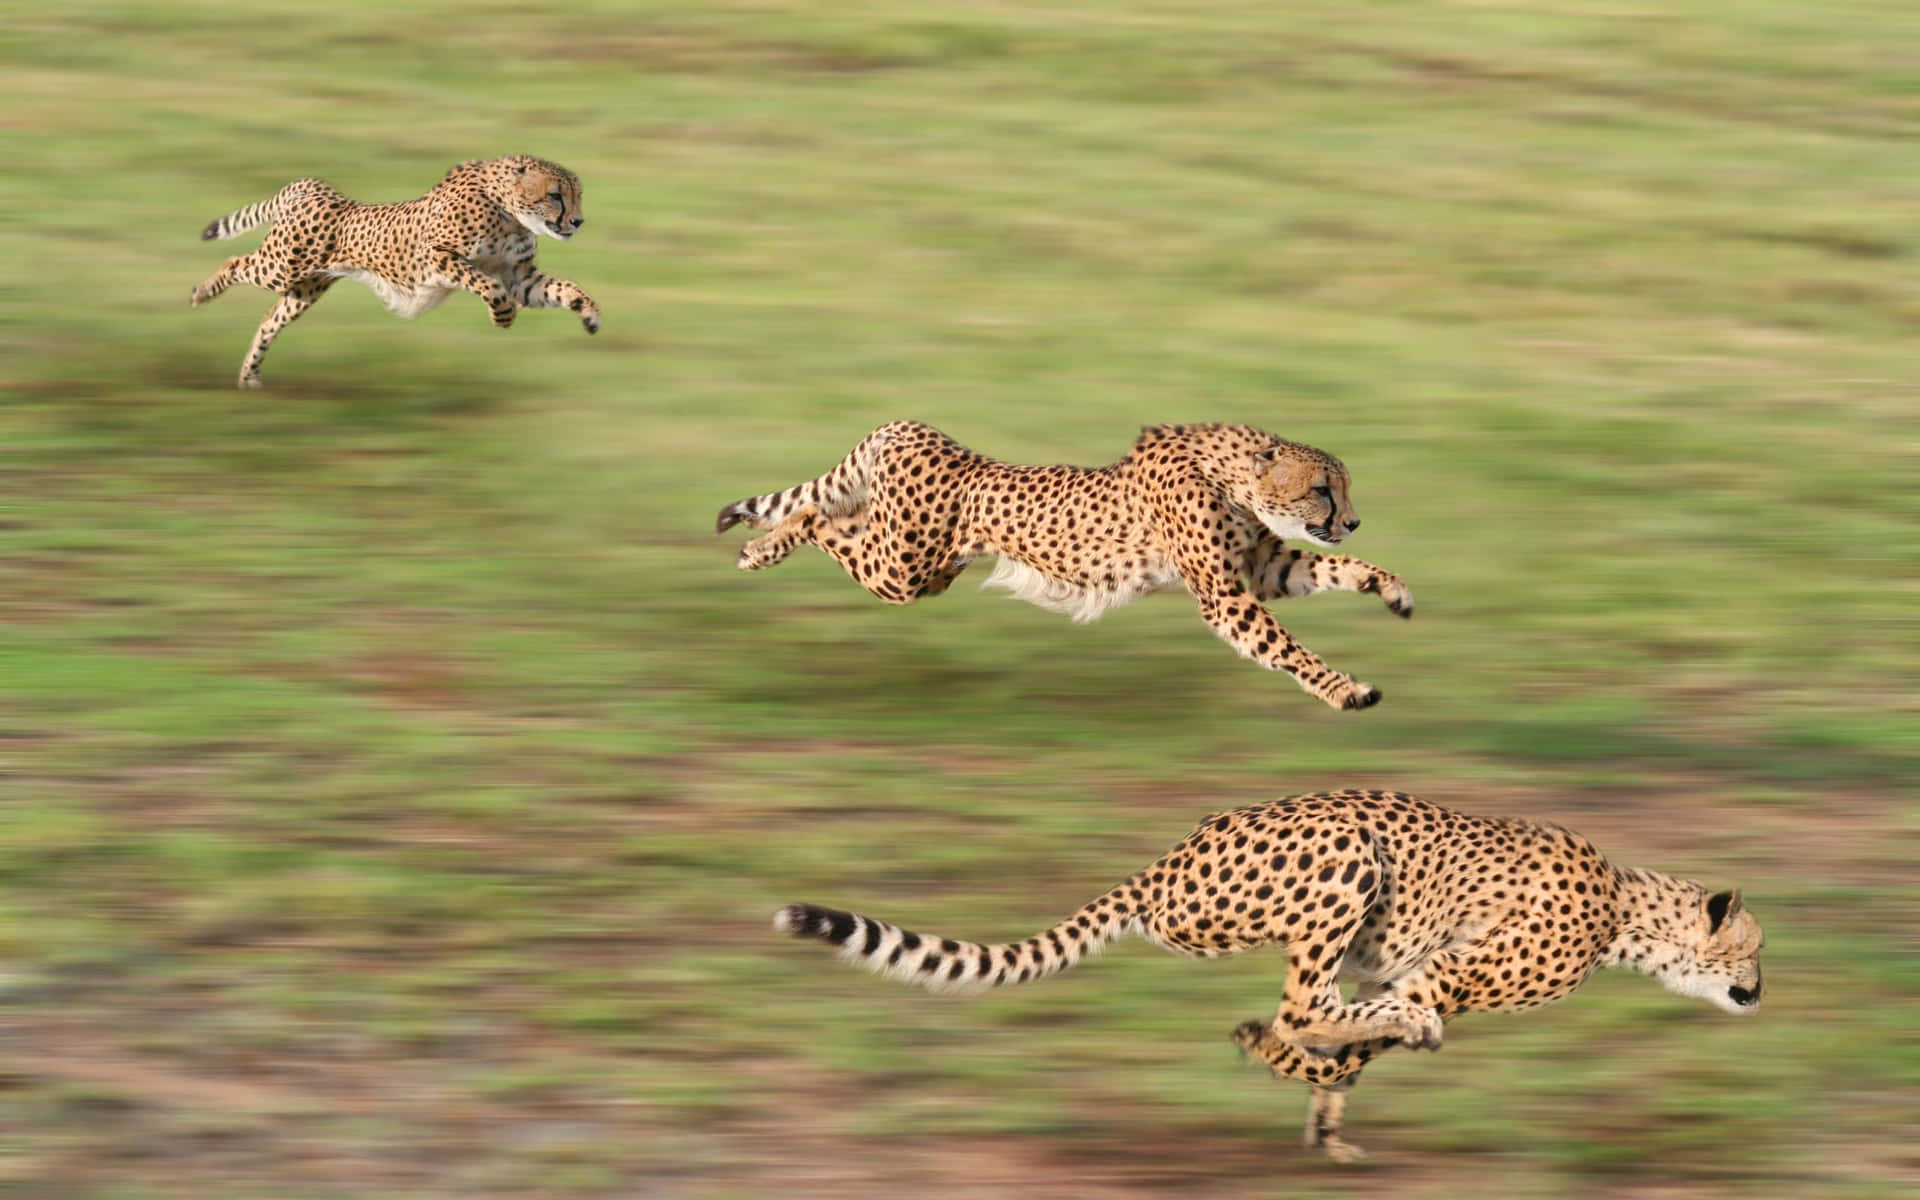 A Close Up of a Cheetah Roaring